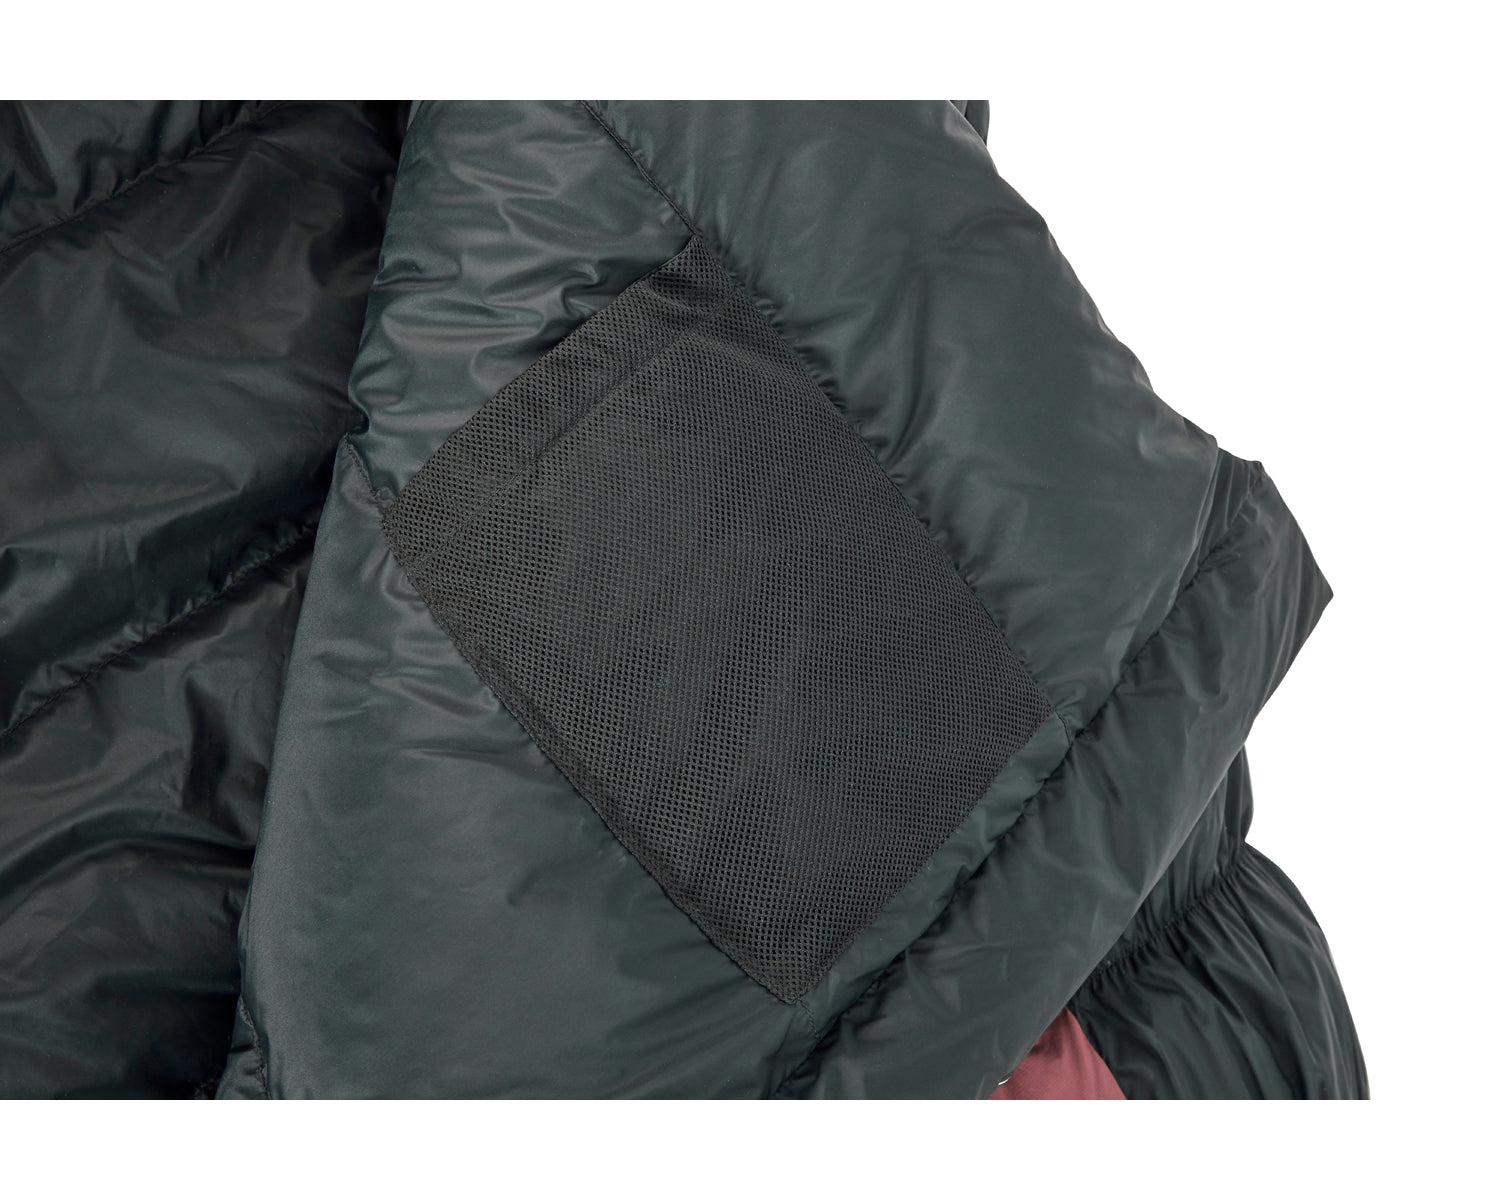 Voyage 500 sleeping bag (RIGHT ZIP) - Ribbon red / Black